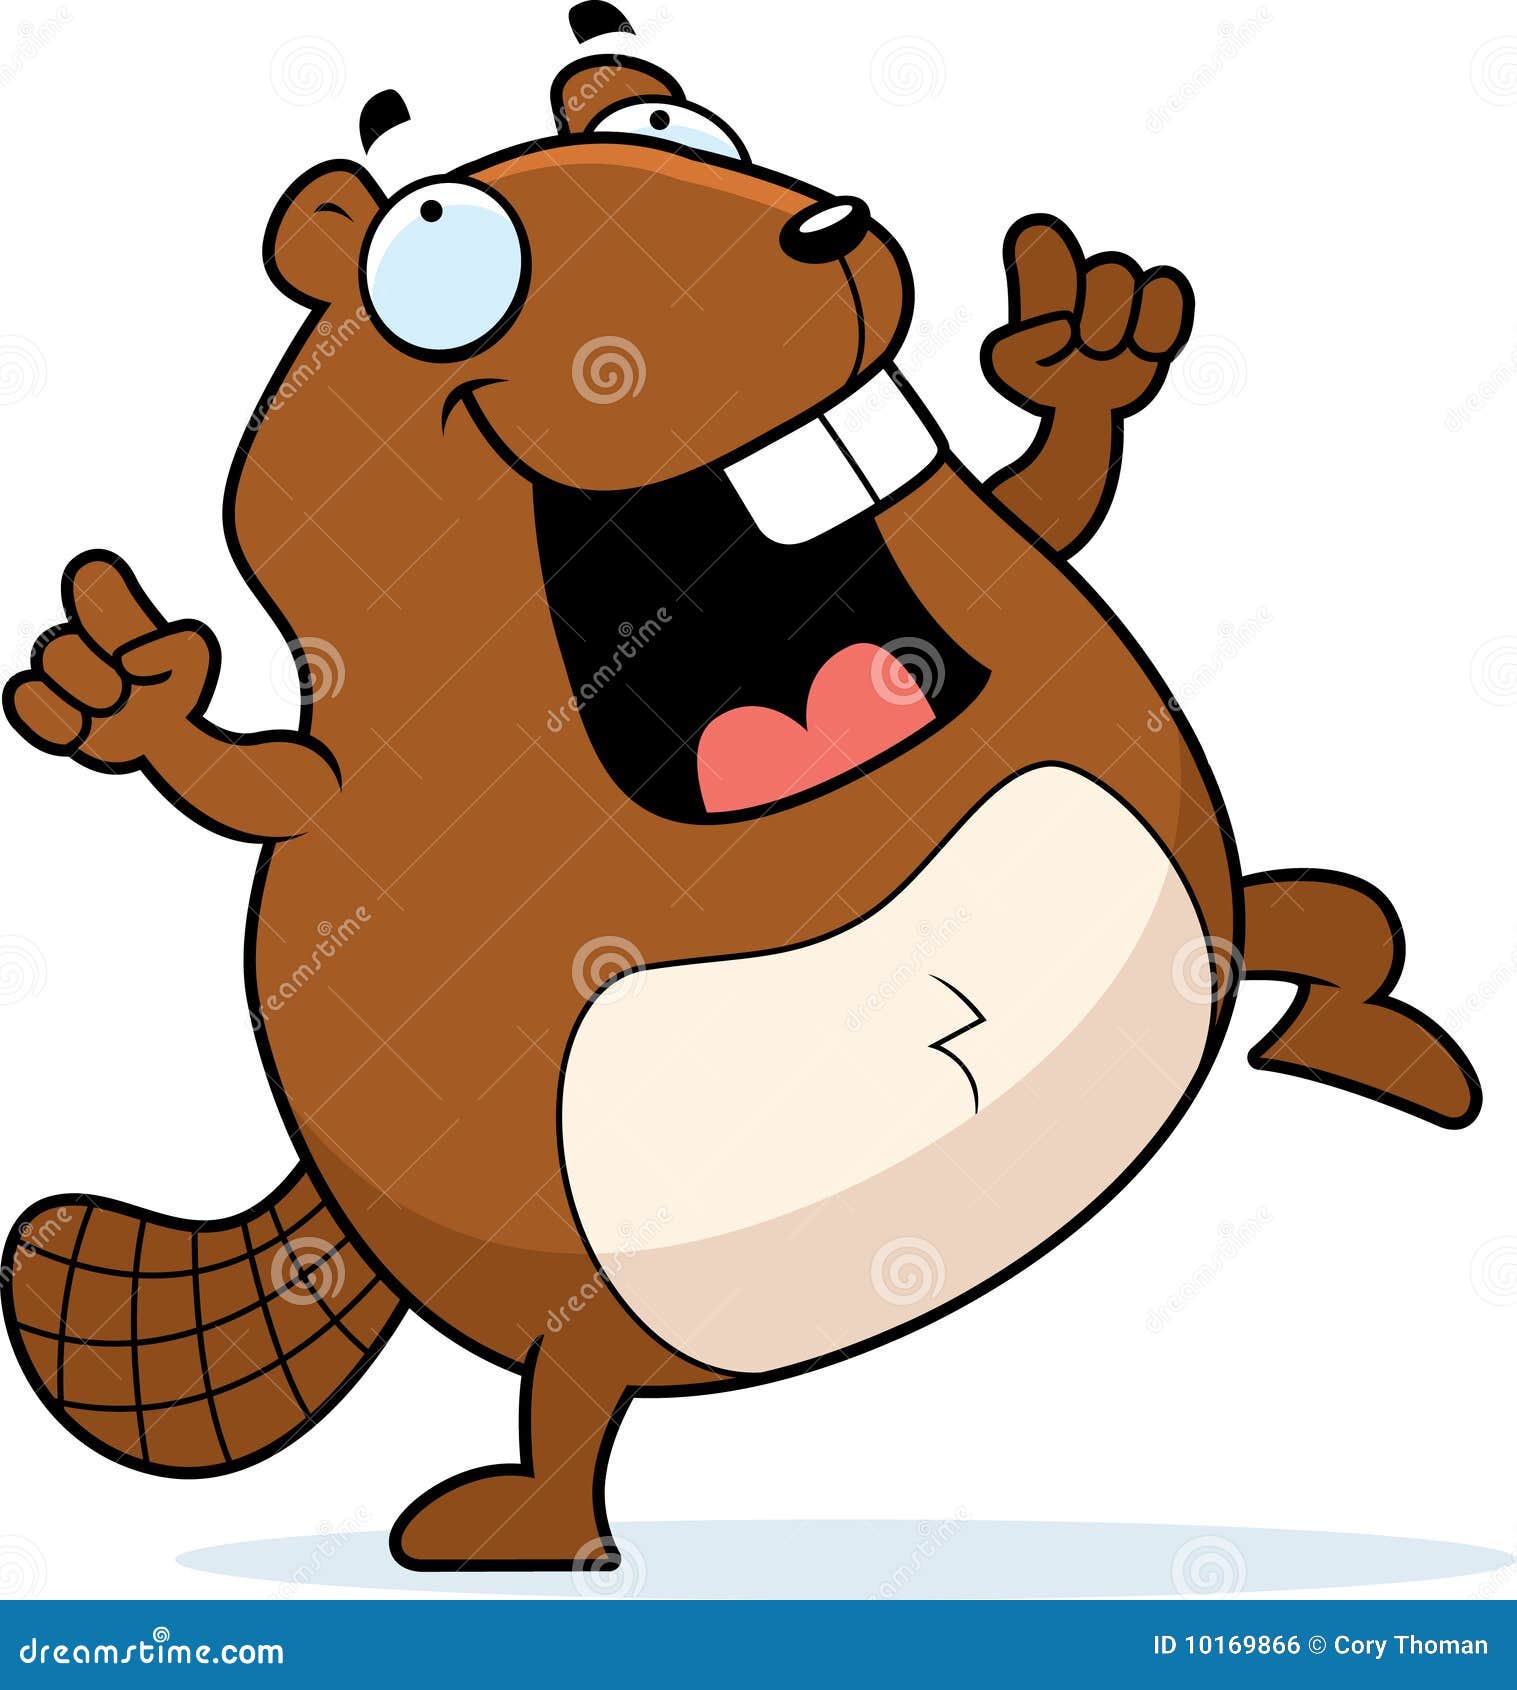 Beaver Dancing Royalty Free Stock Image - Image: 10169866